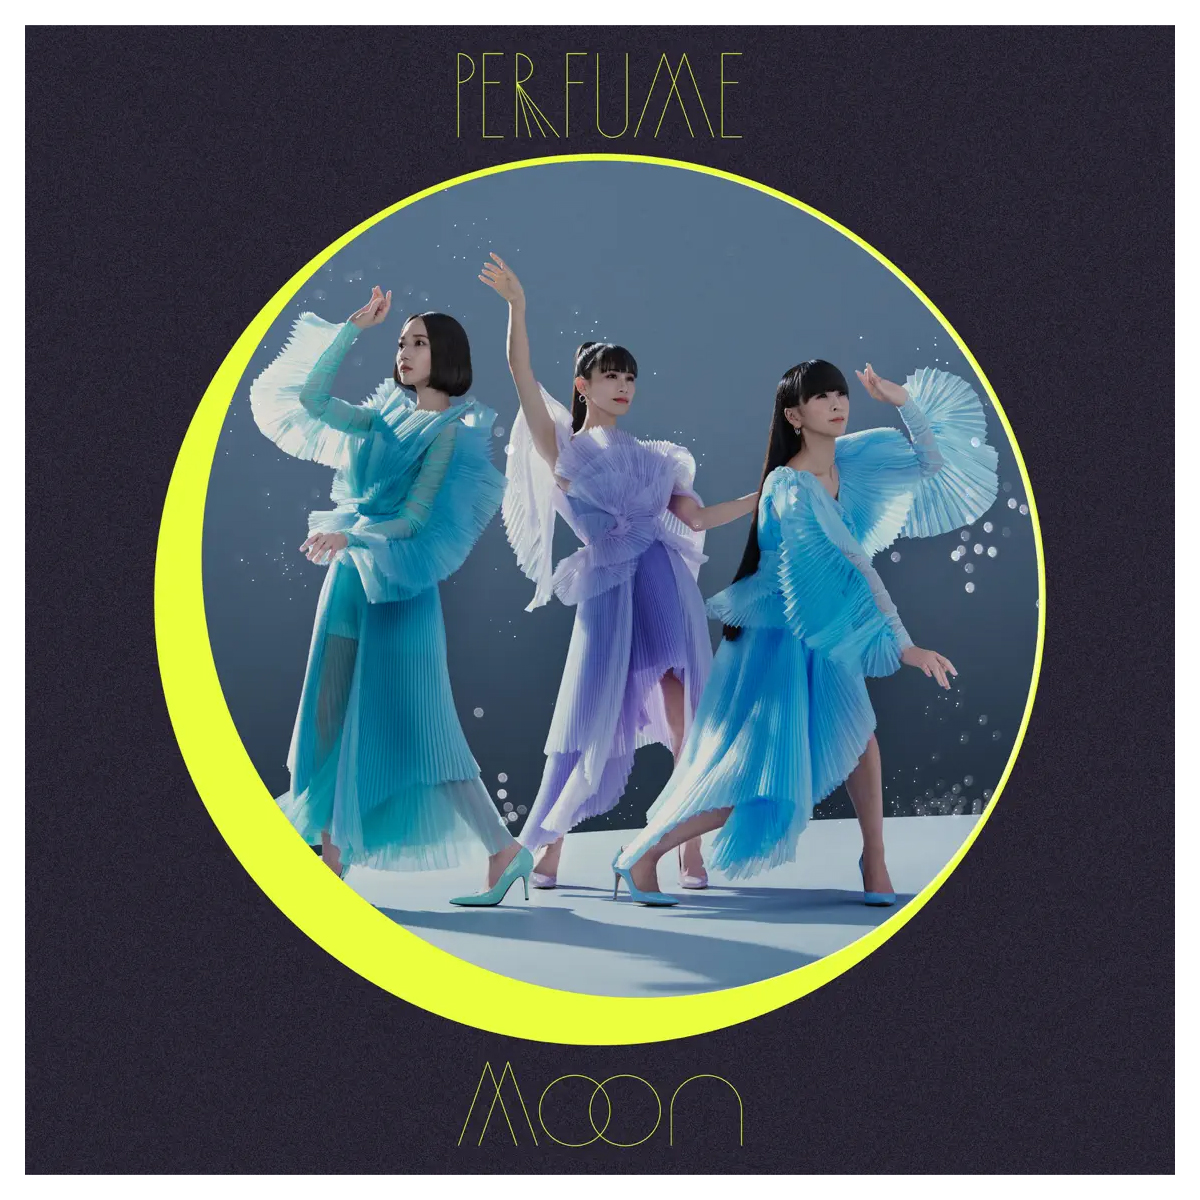 Perfume - Moon